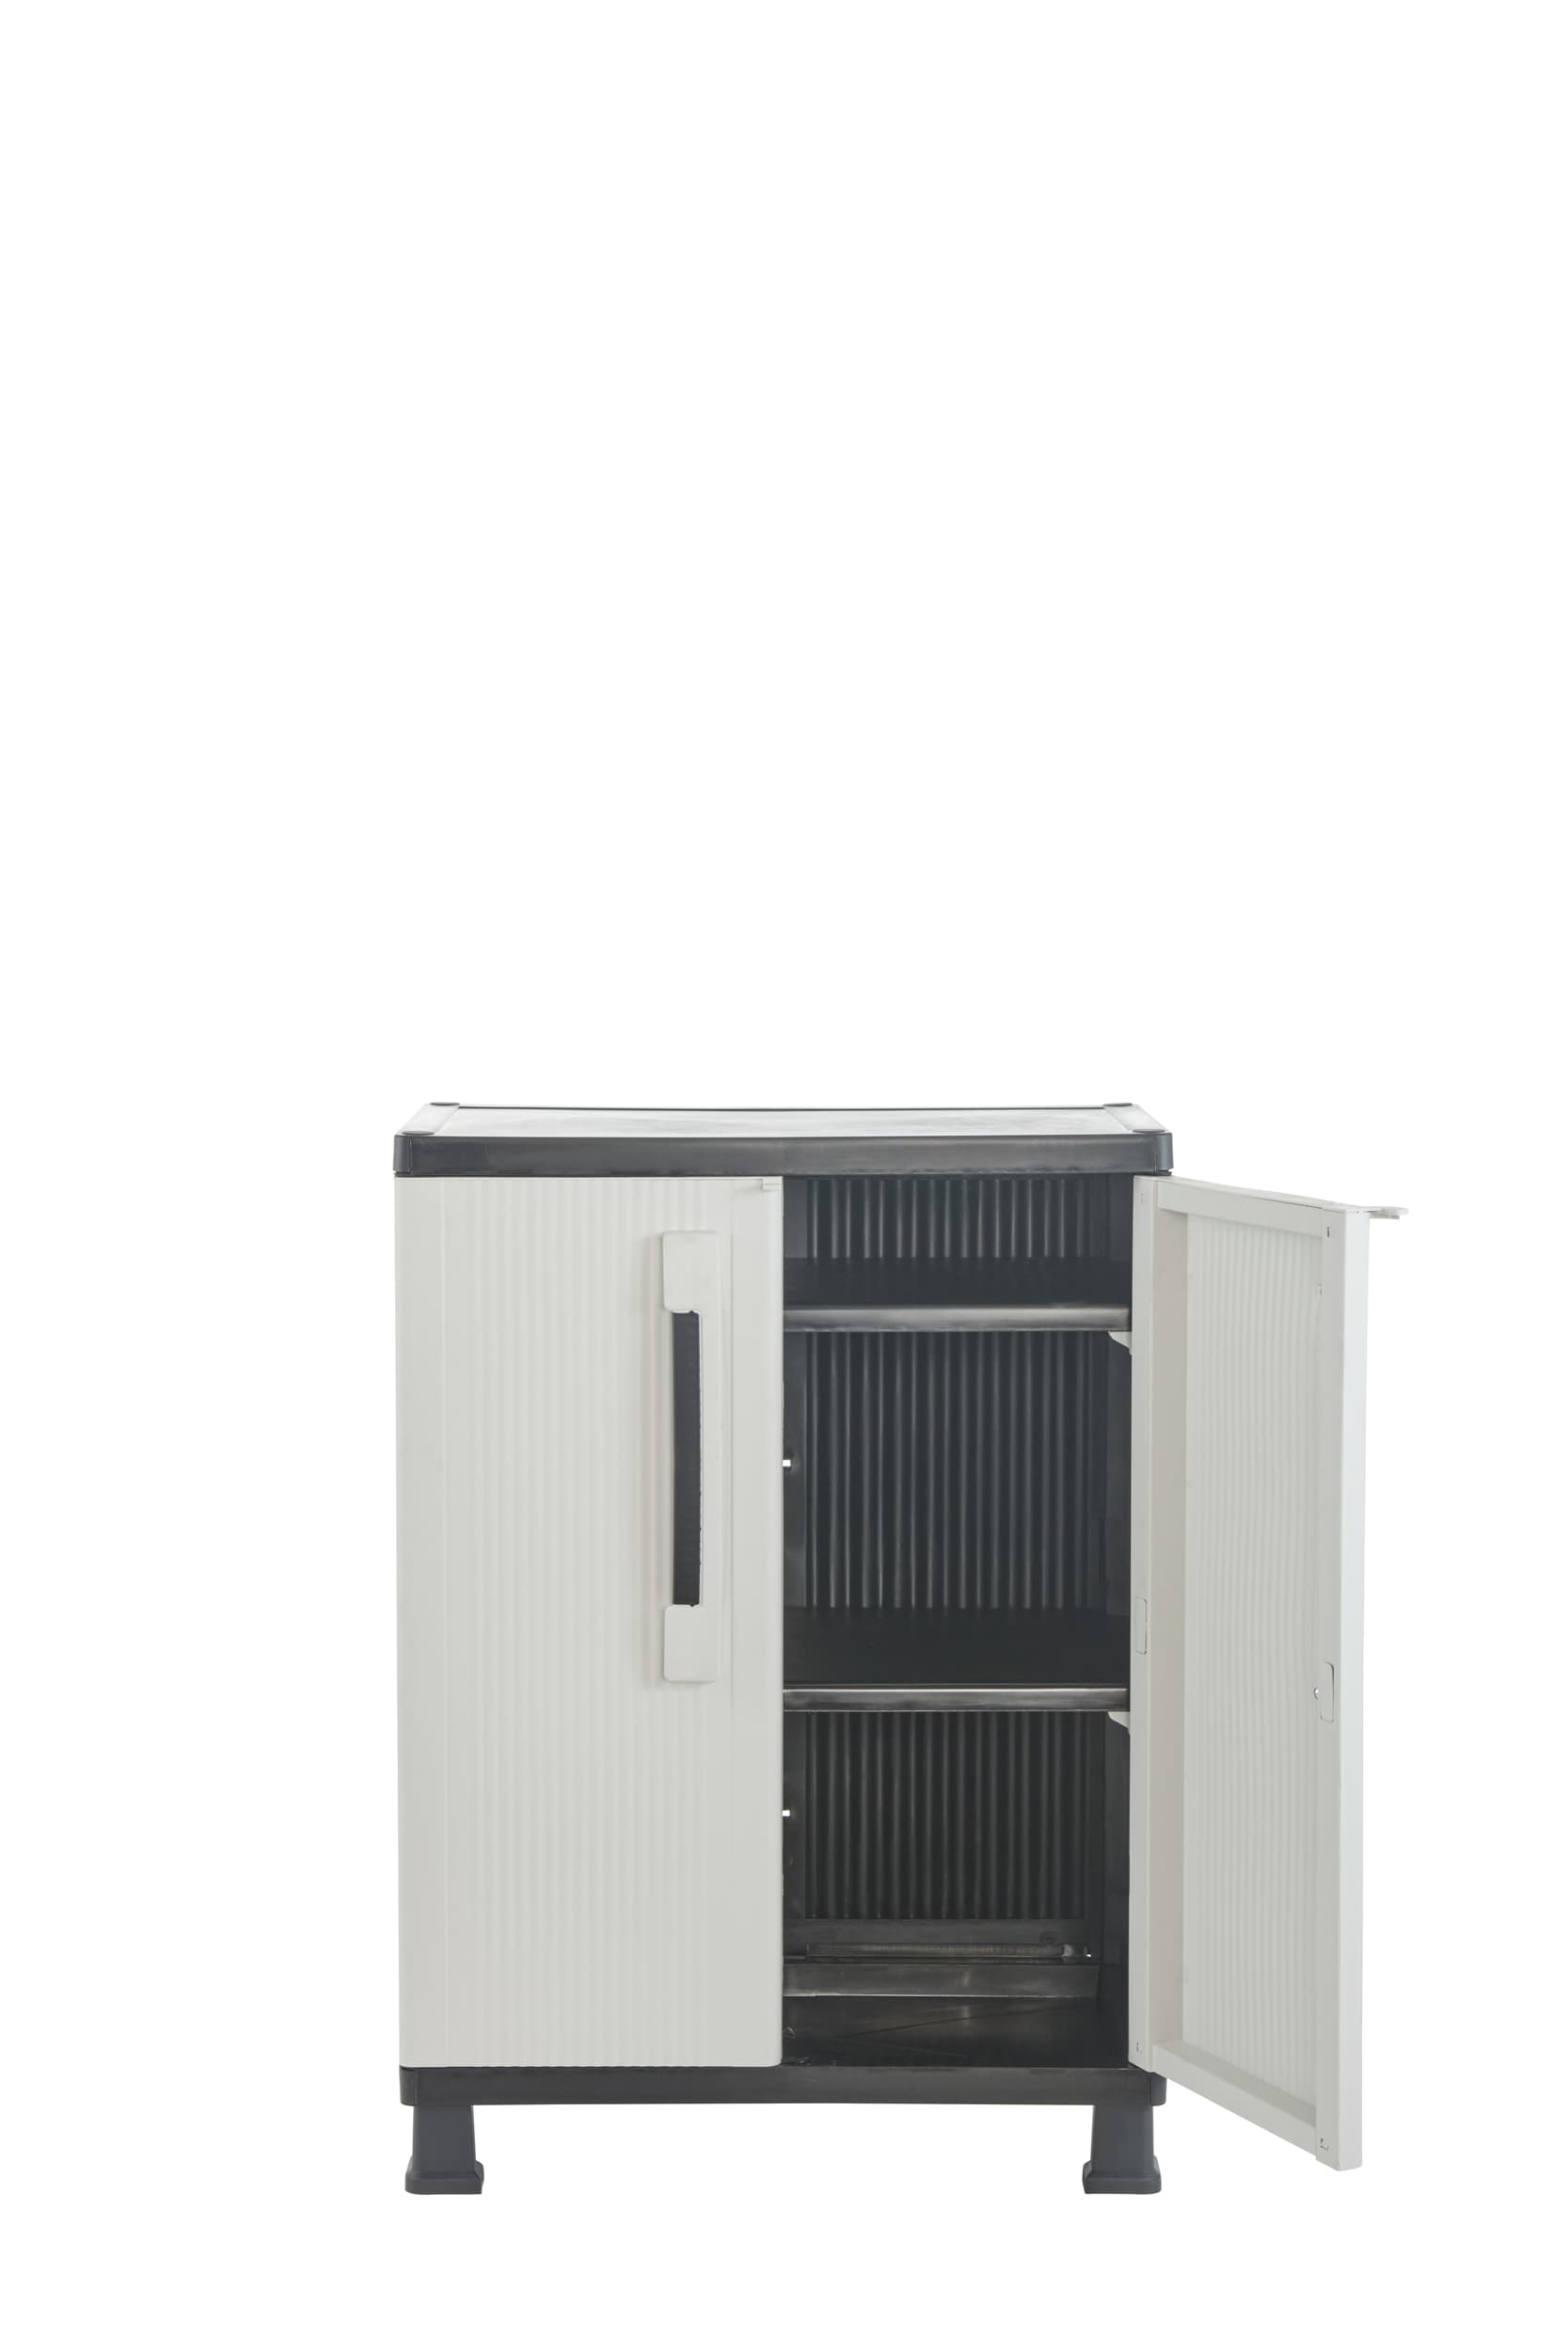 Plastic Freestanding Garage Cabinet in Gray (27 in. W x 68 in. H x 15 in. D)